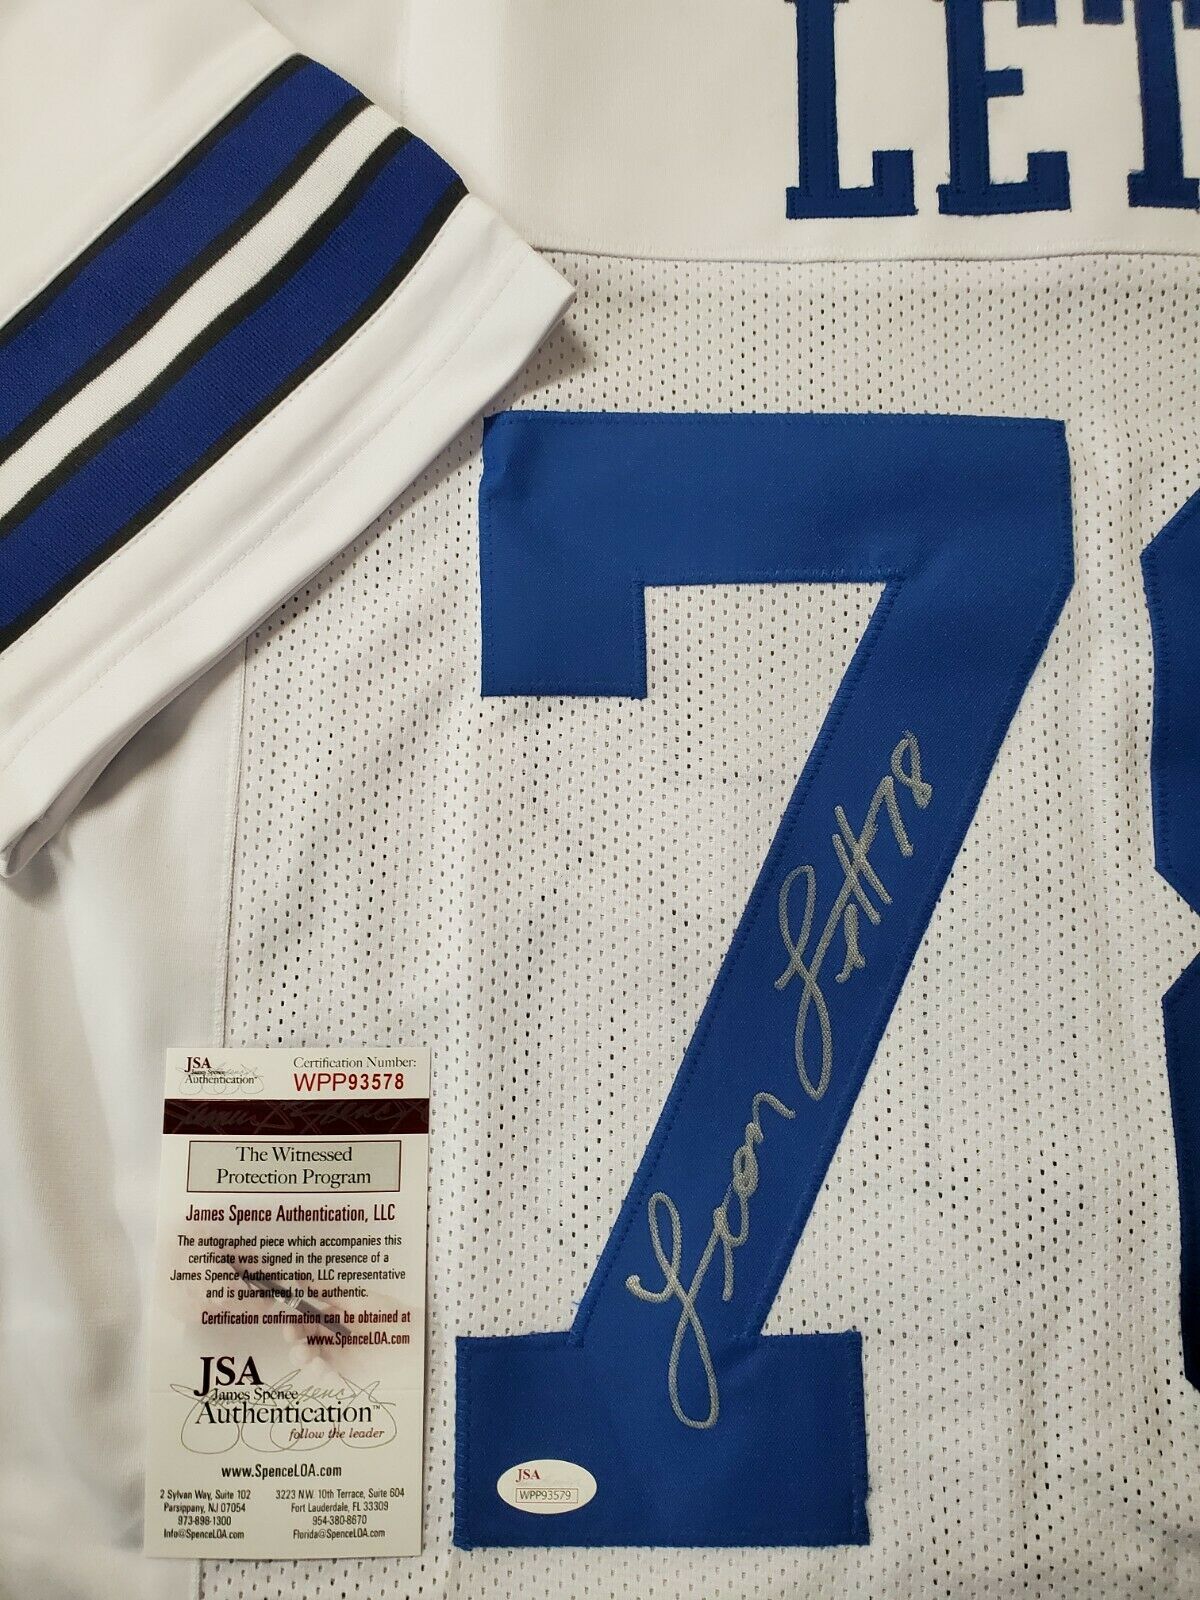 MVP Authentics Leon Lett Autographed Signed Dallas Cowboys Jersey Jsa  Coa 117 sports jersey framing , jersey framing